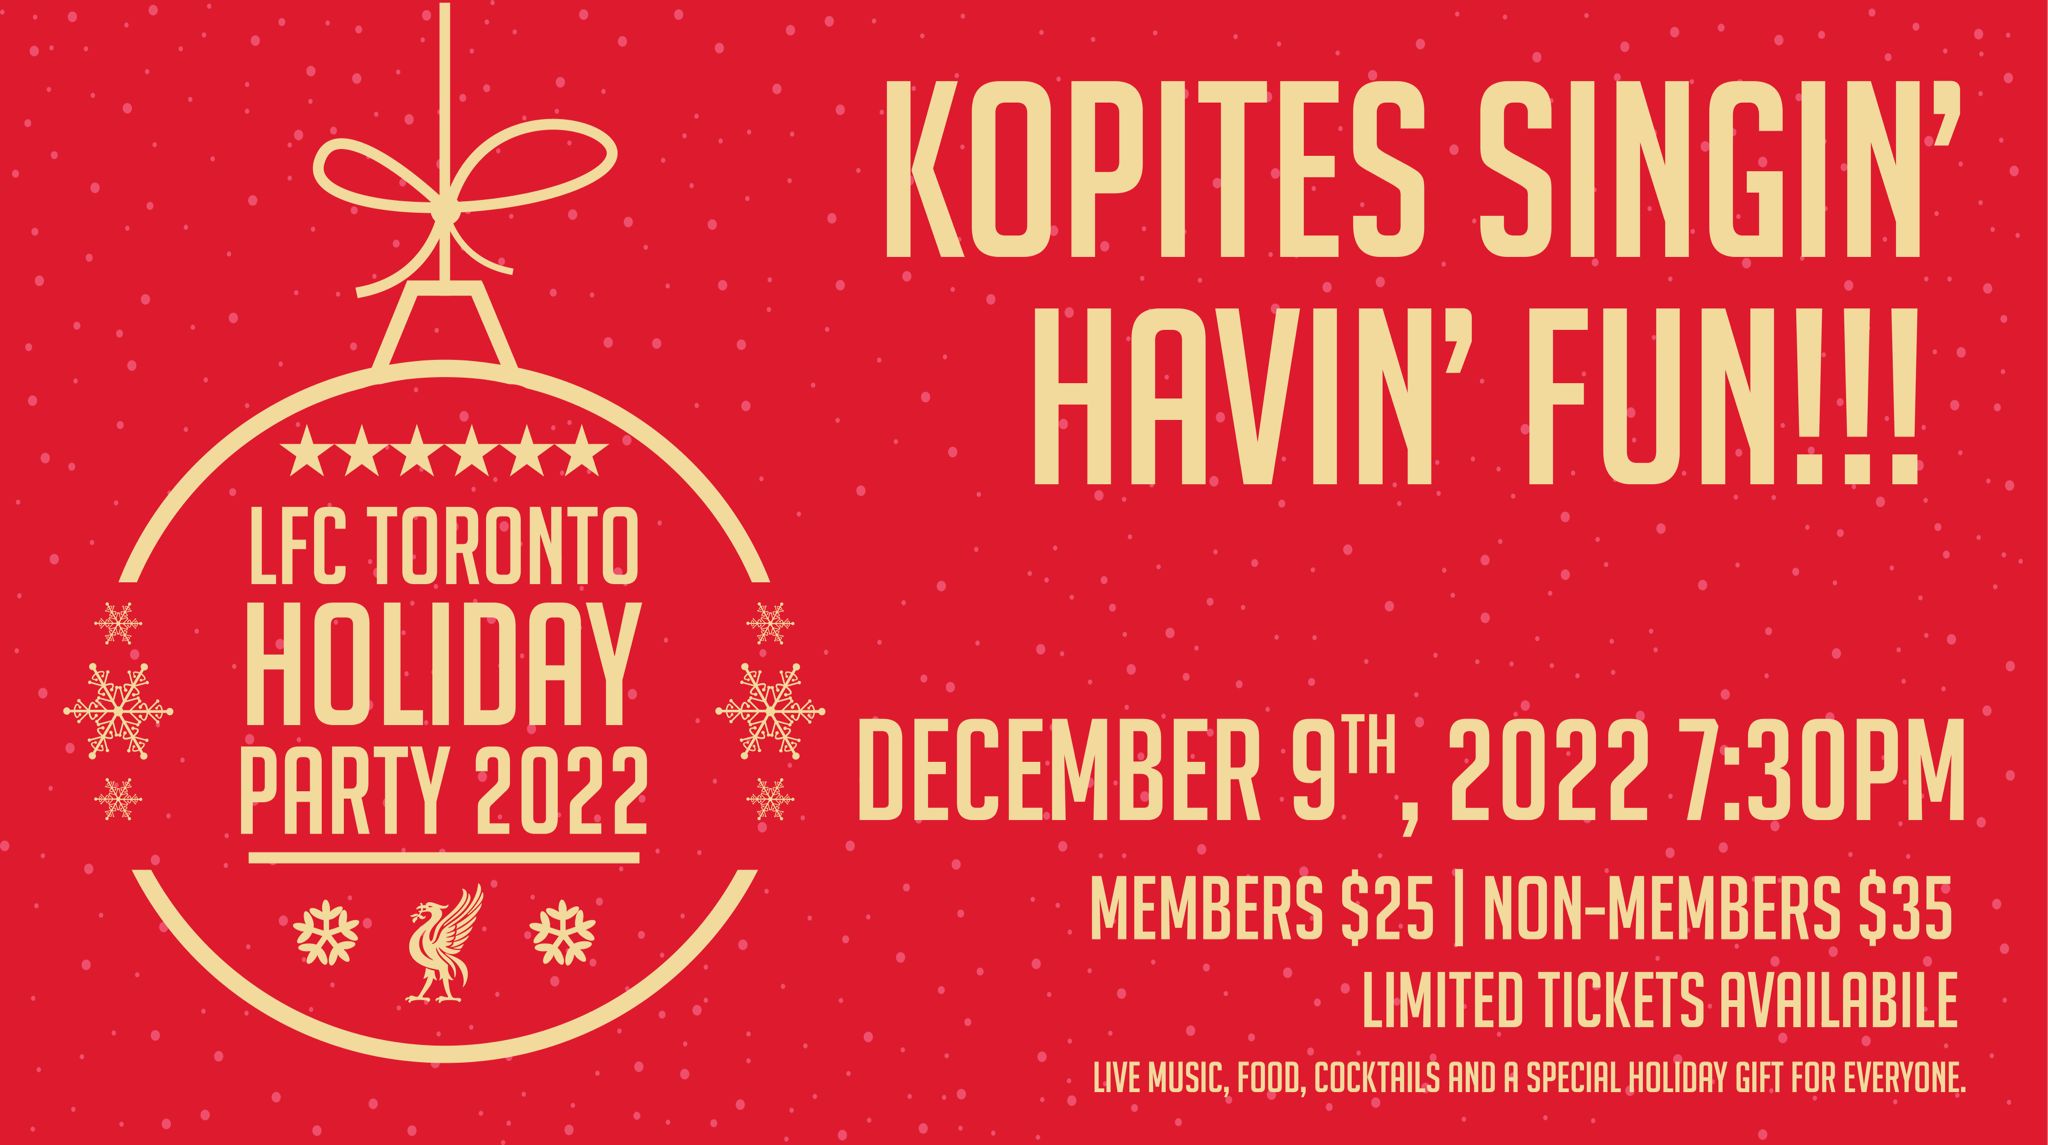 LFC Toronto Holiday Party 2022